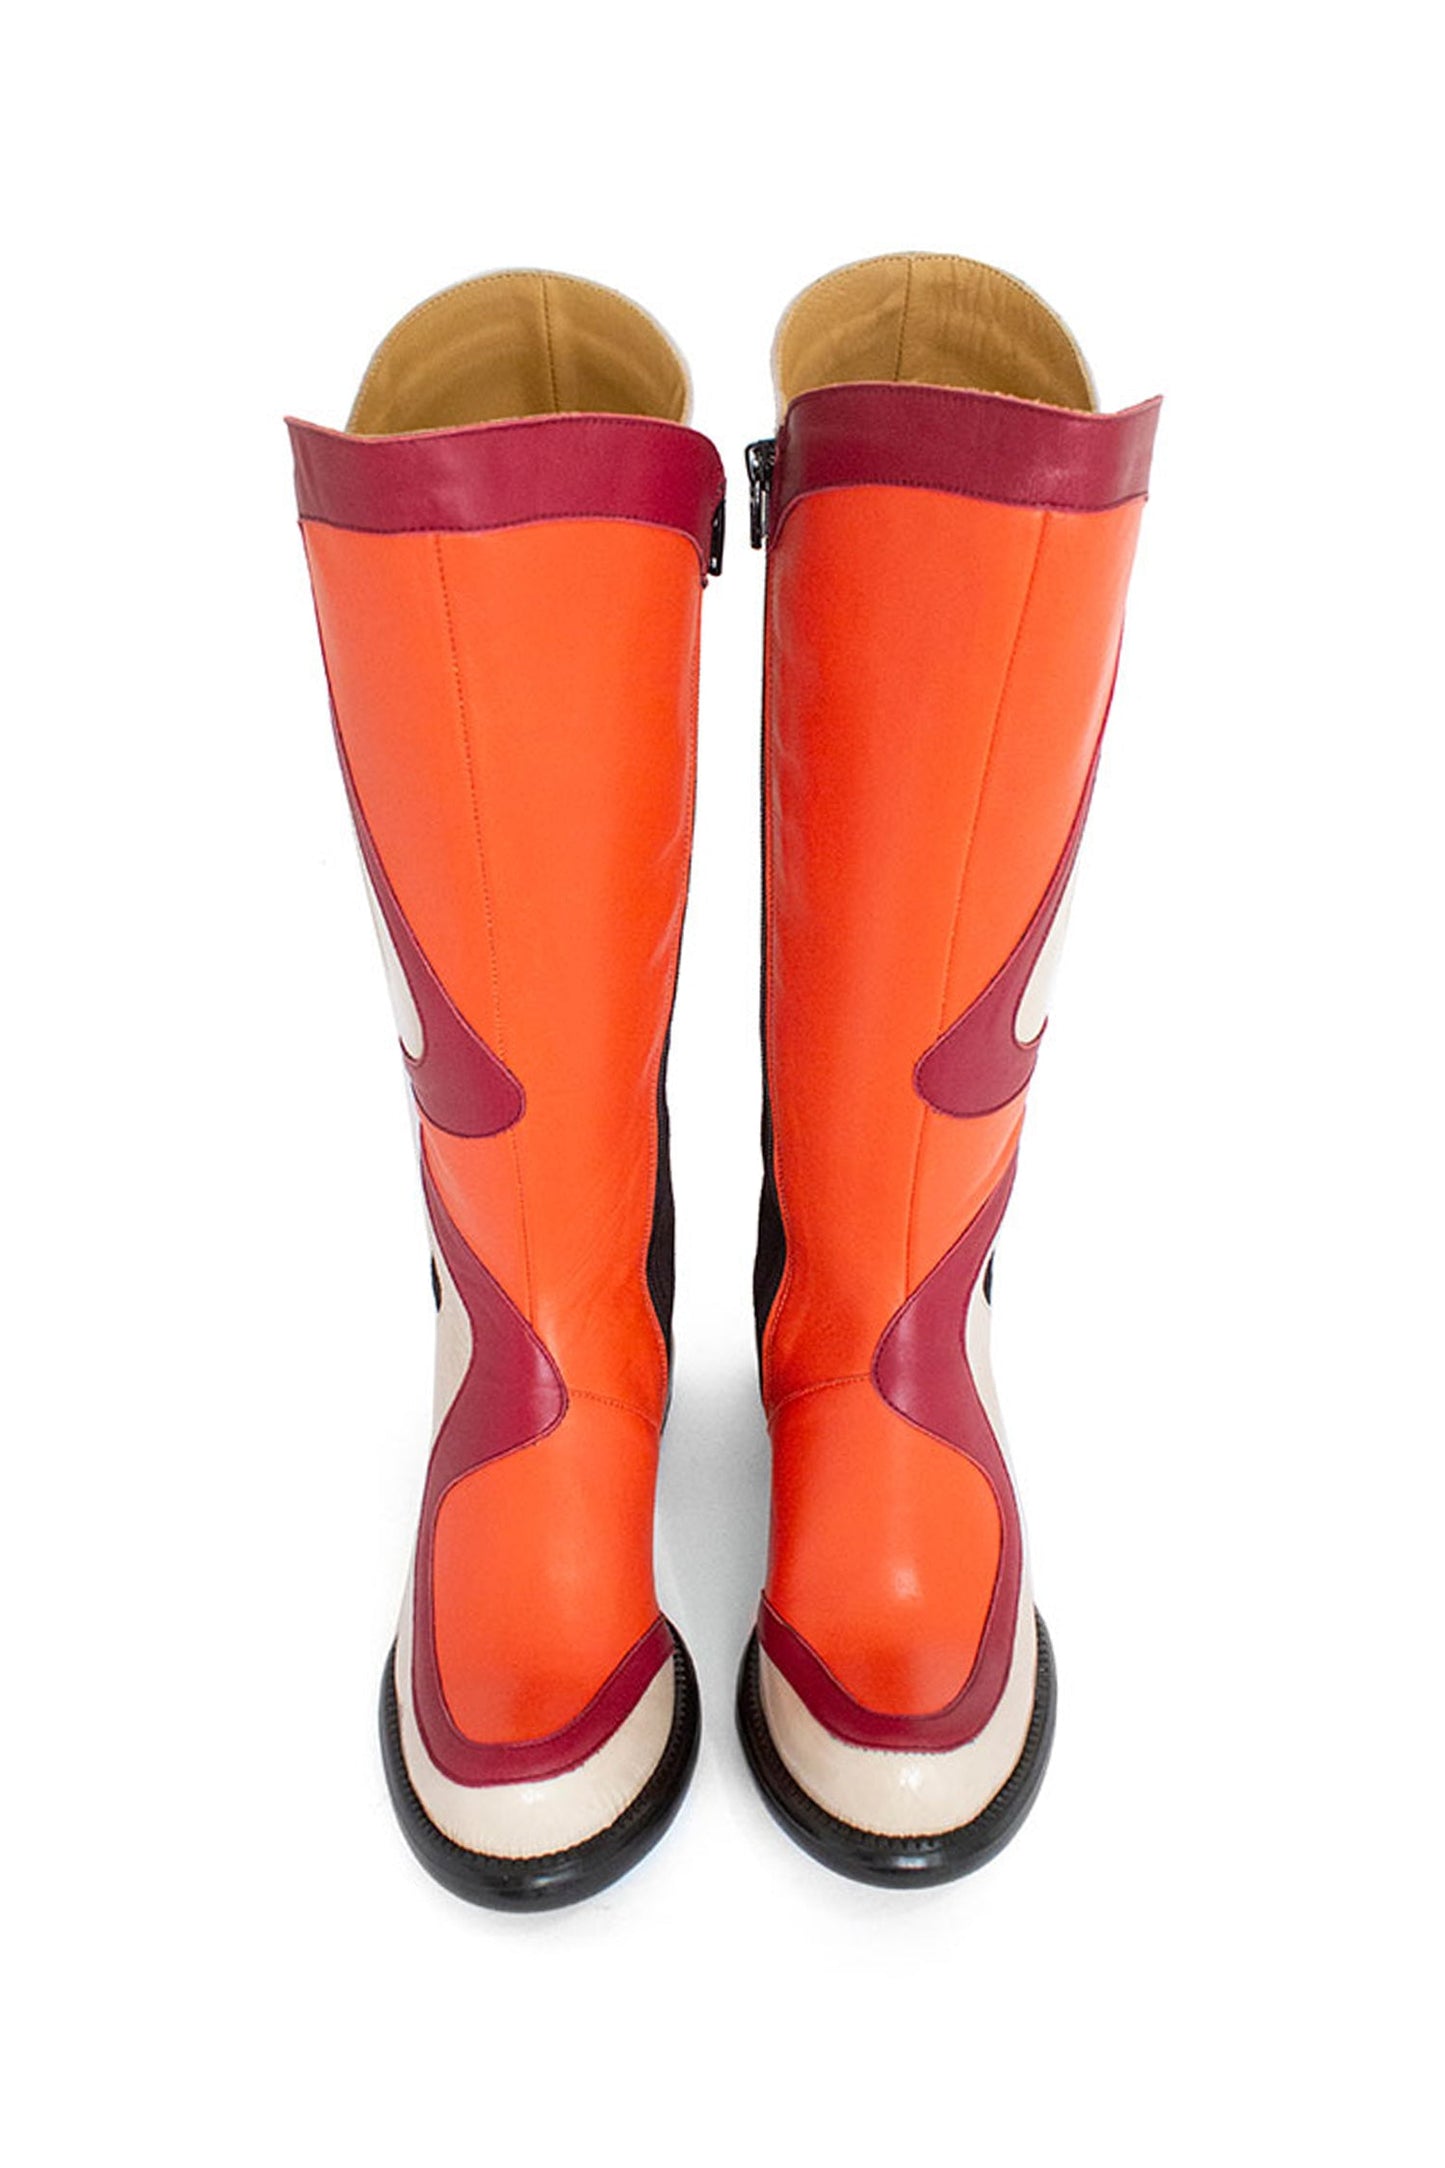 Anna Sui x John Fluevog Warhol Boot orange, back, sole and pyramidal heel is black